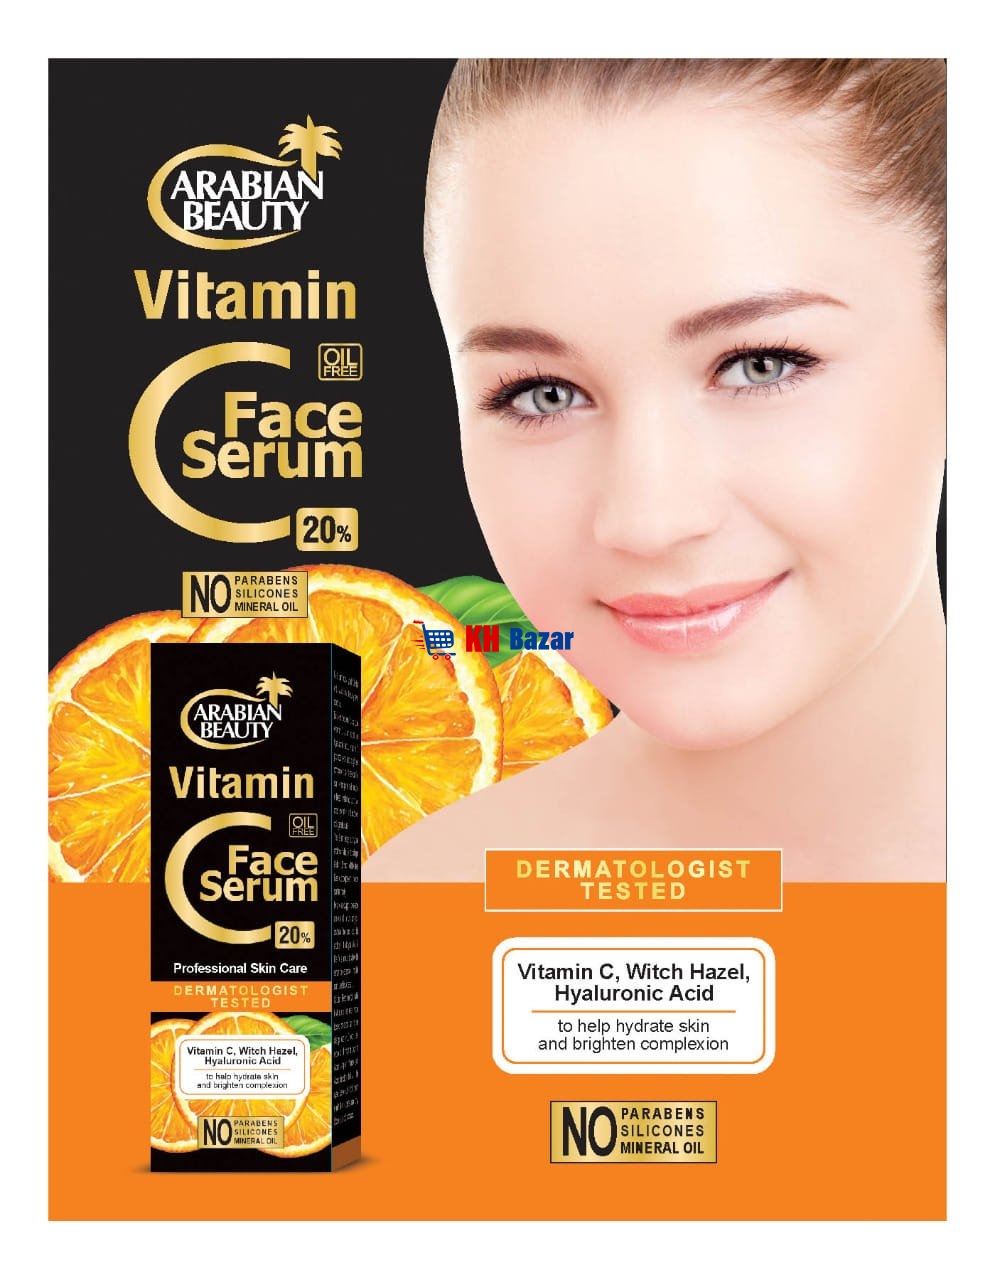 Arabian Beauty Vitamin C Face Serum Kh Bazar